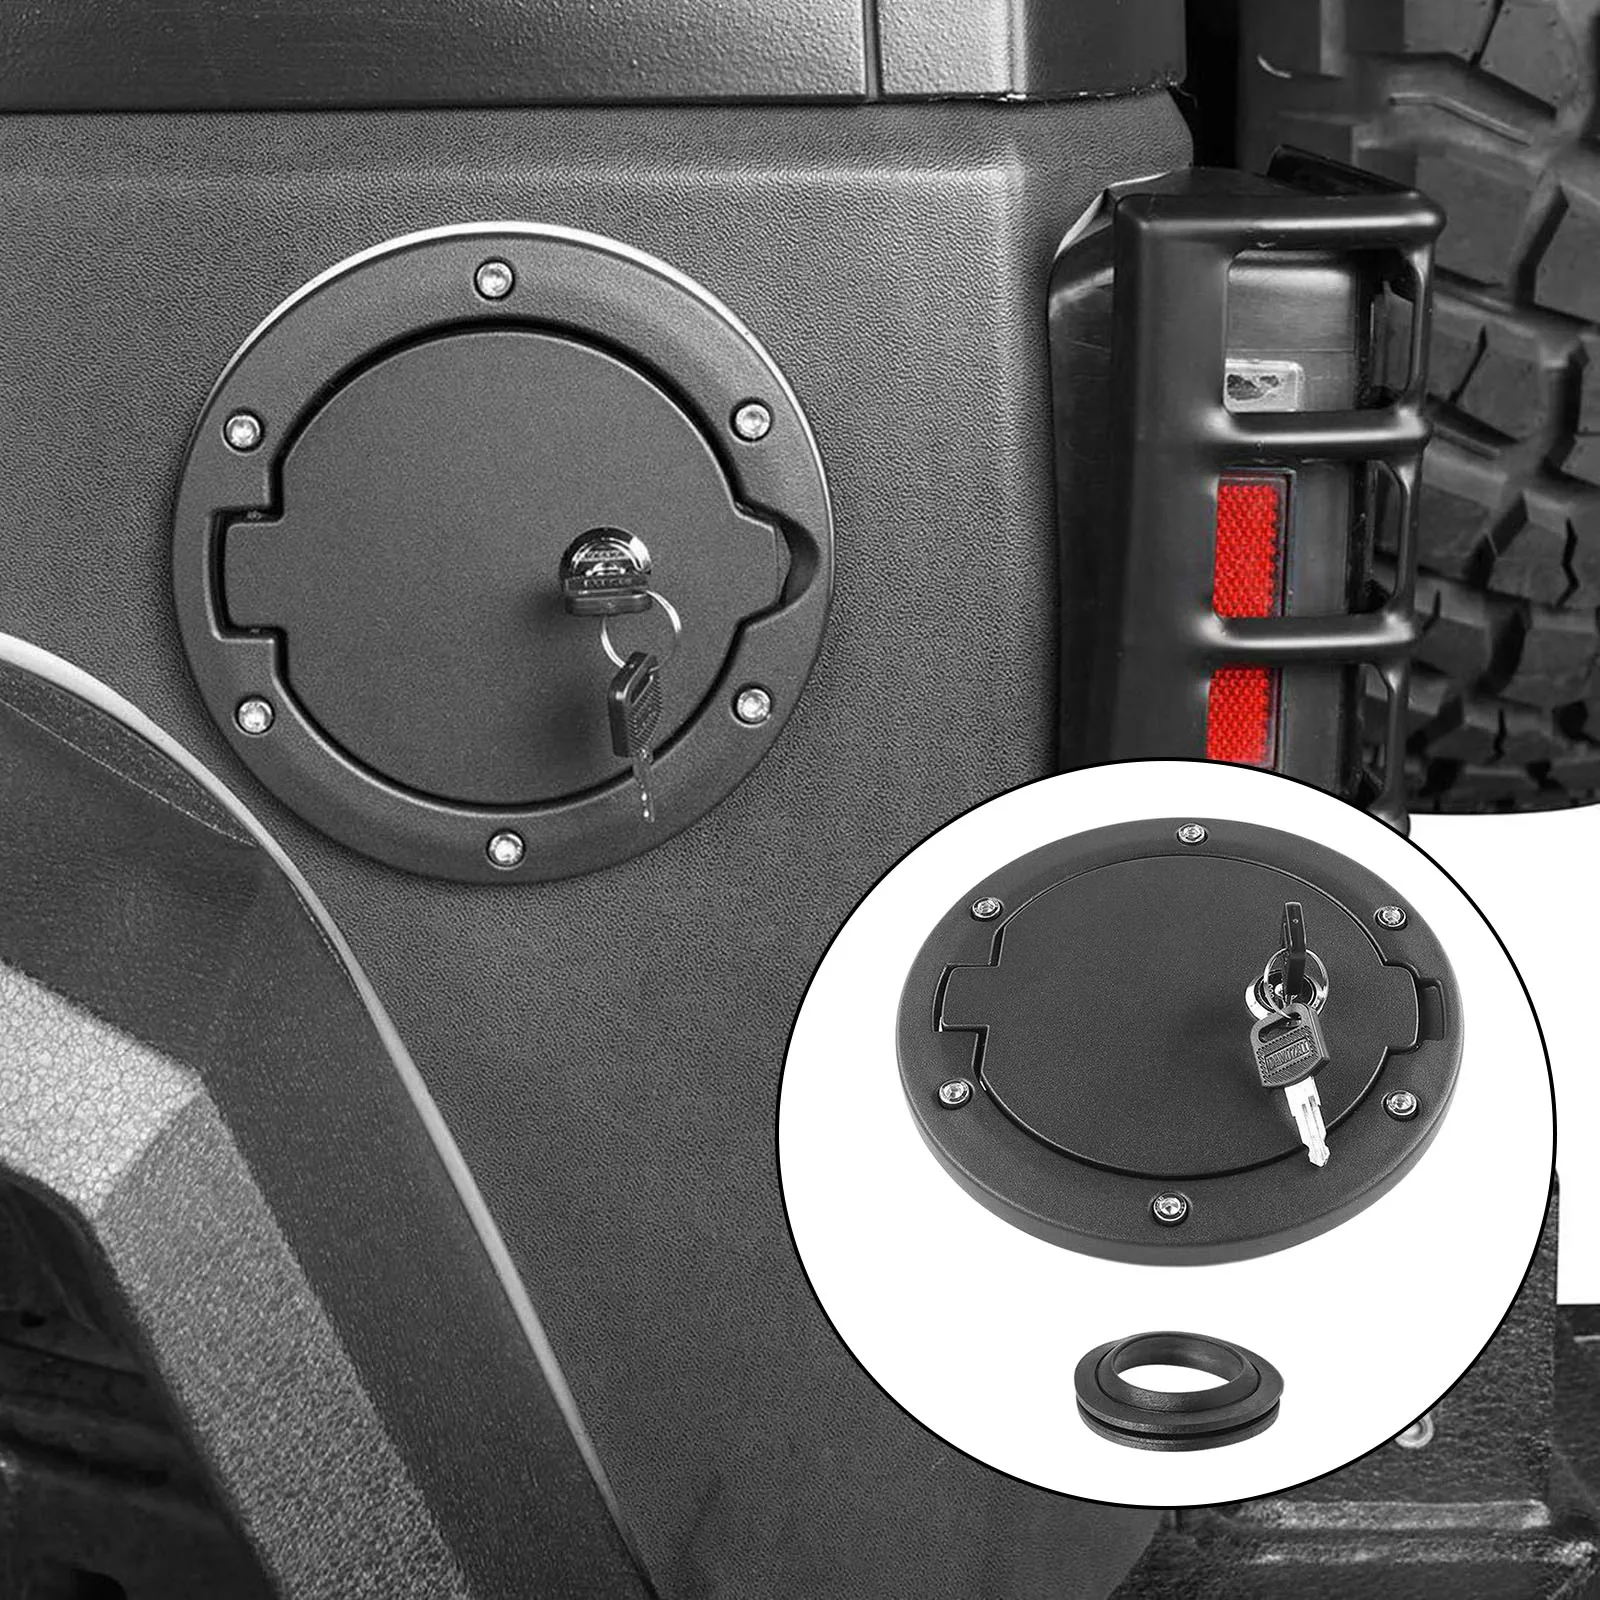 Aluminum Gas Fuel Filler Door Cover for Wrangler JK AccessoriesGas Cover with lock